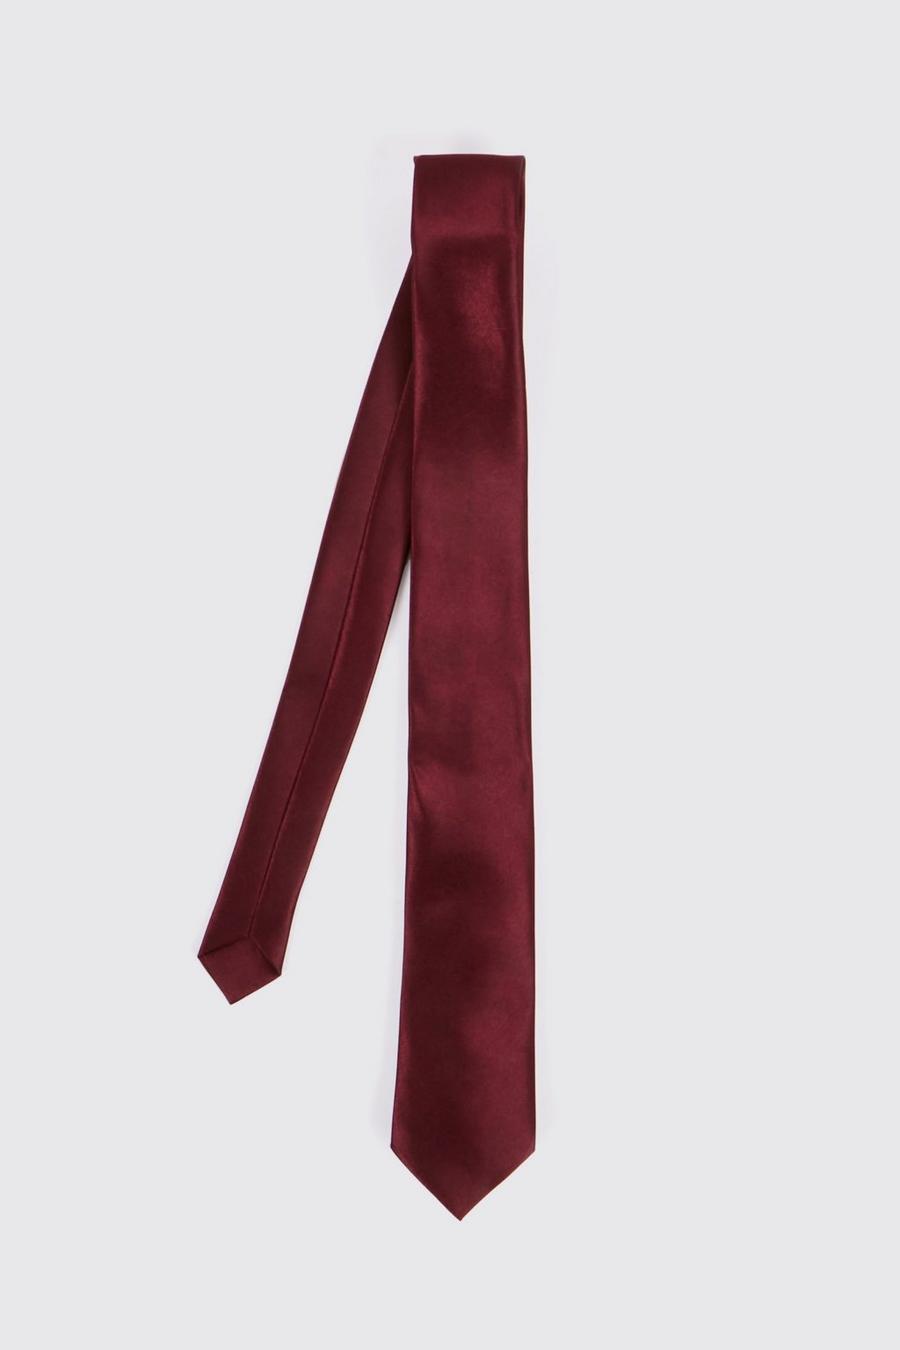 Burgundy red Plain Tie